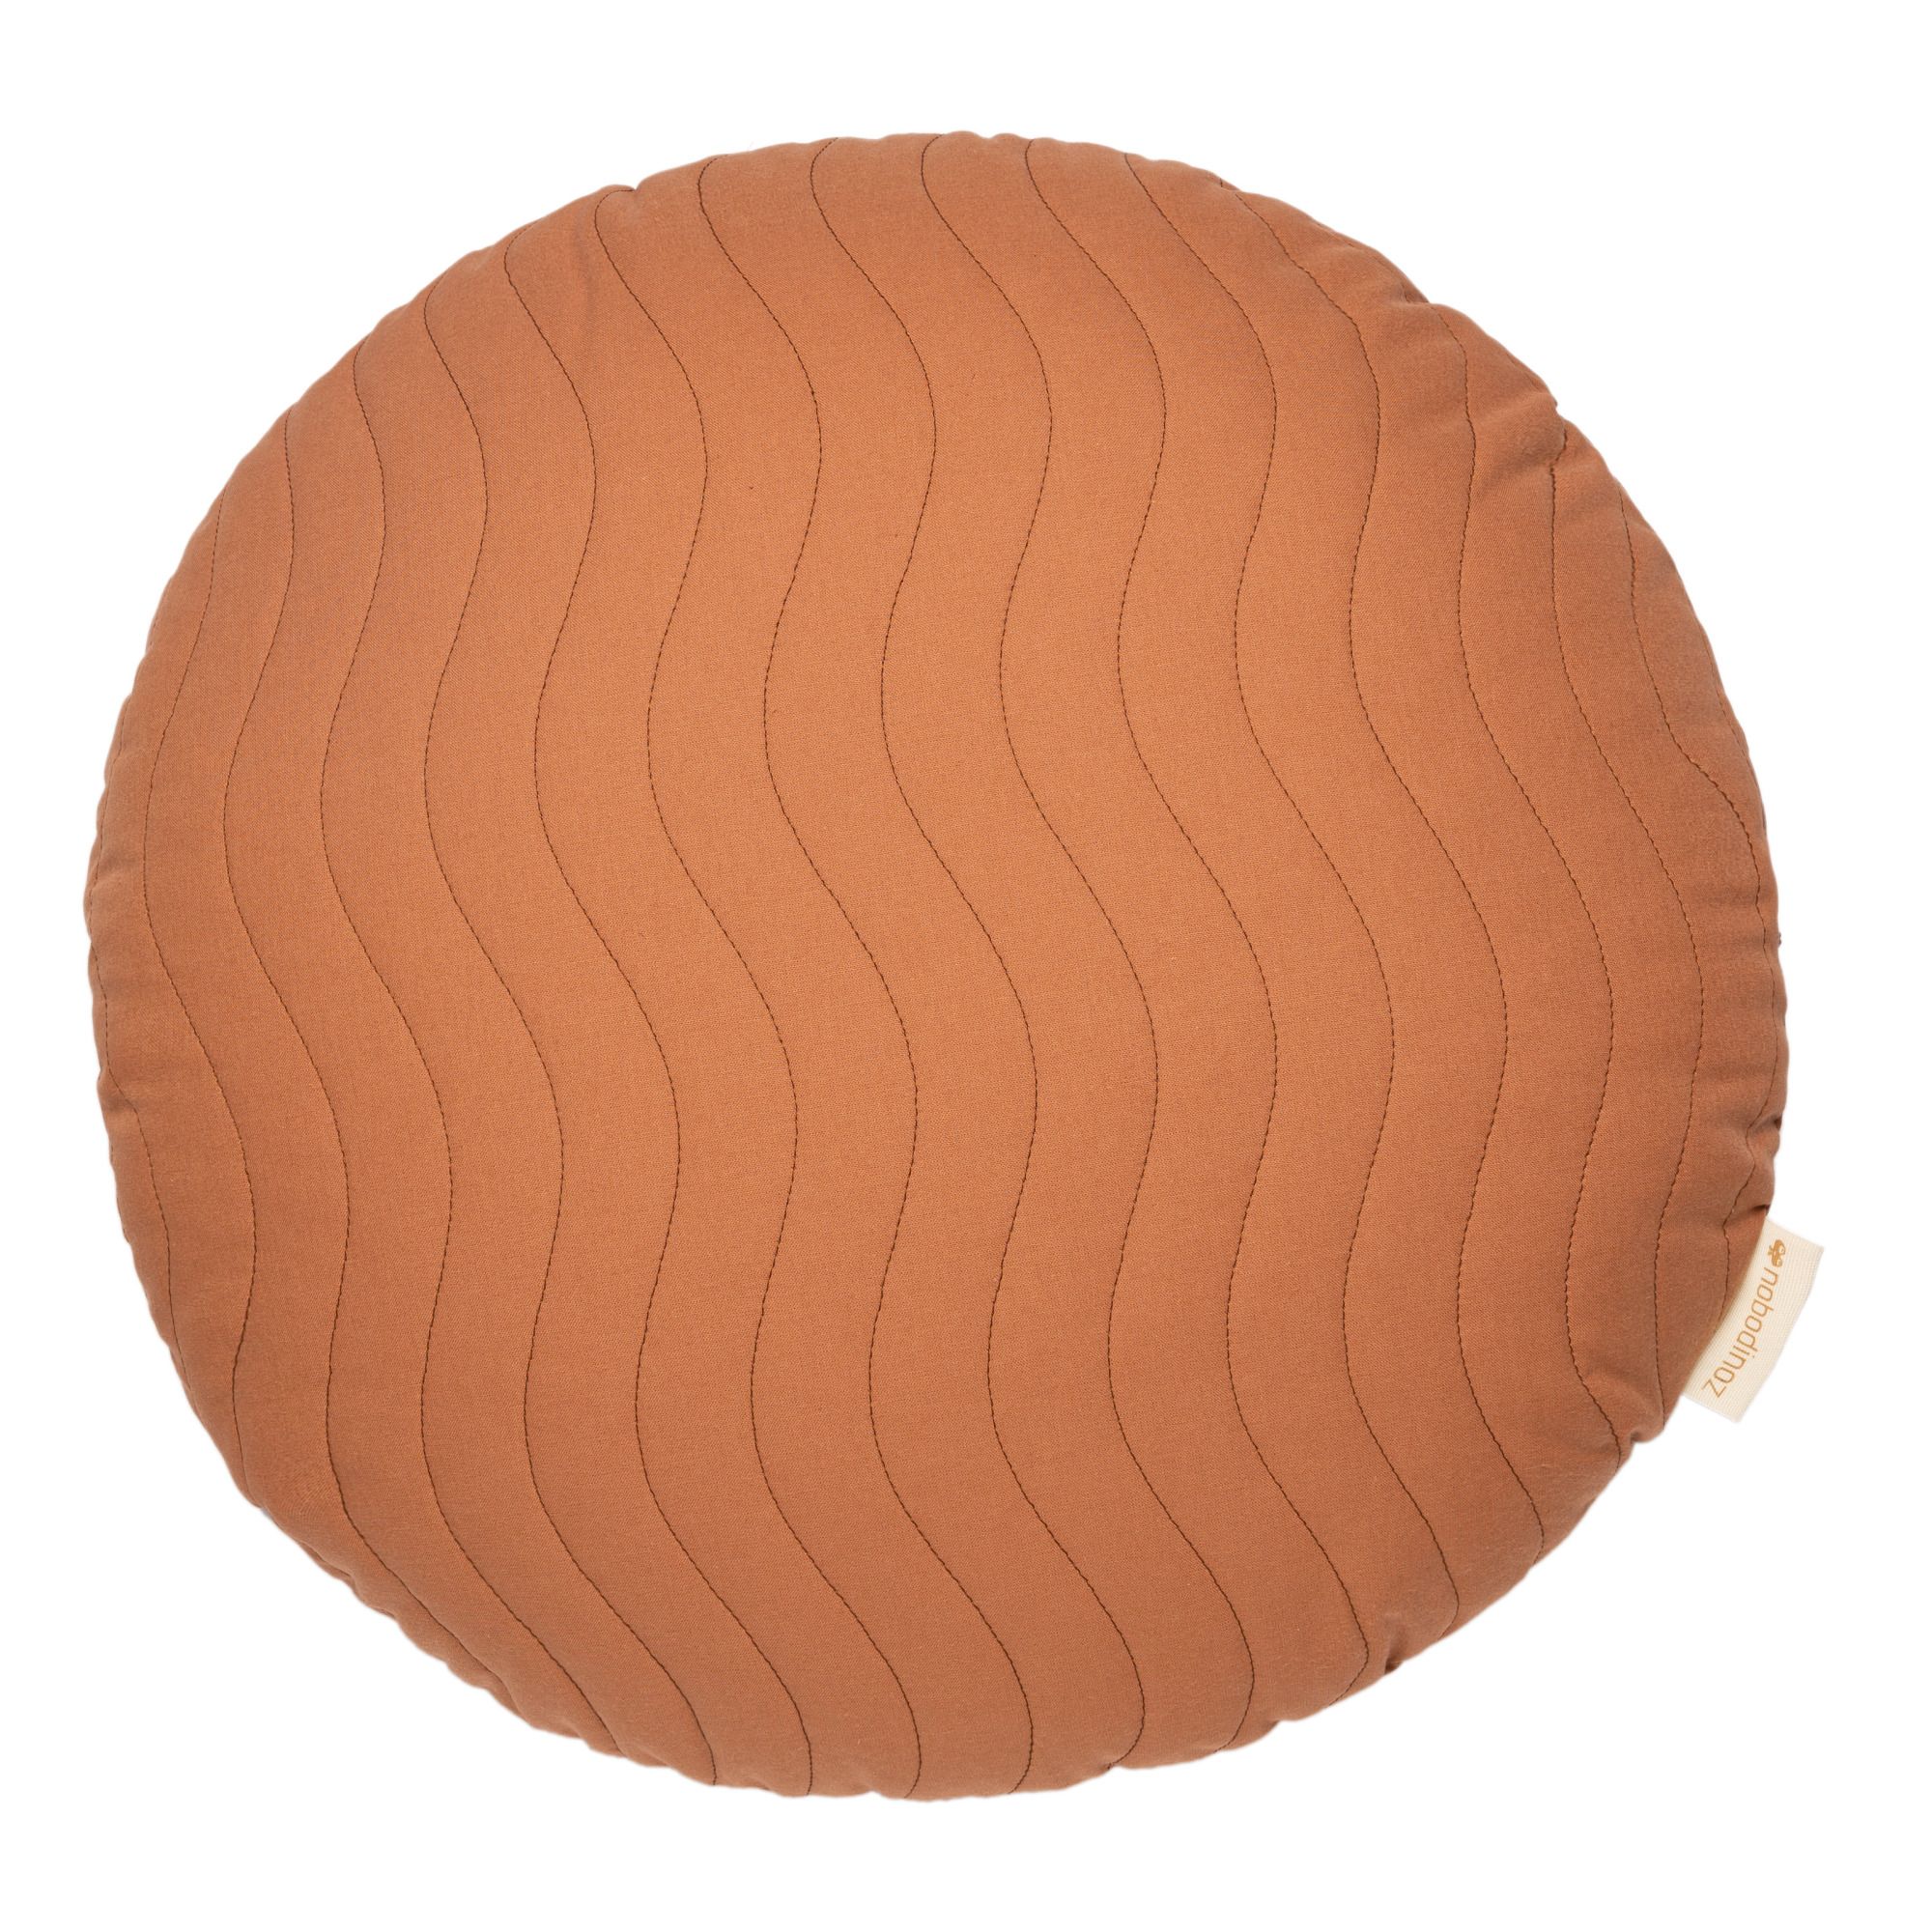 Cuscino rotondo diametro 40 cm in cotone oeko-tex